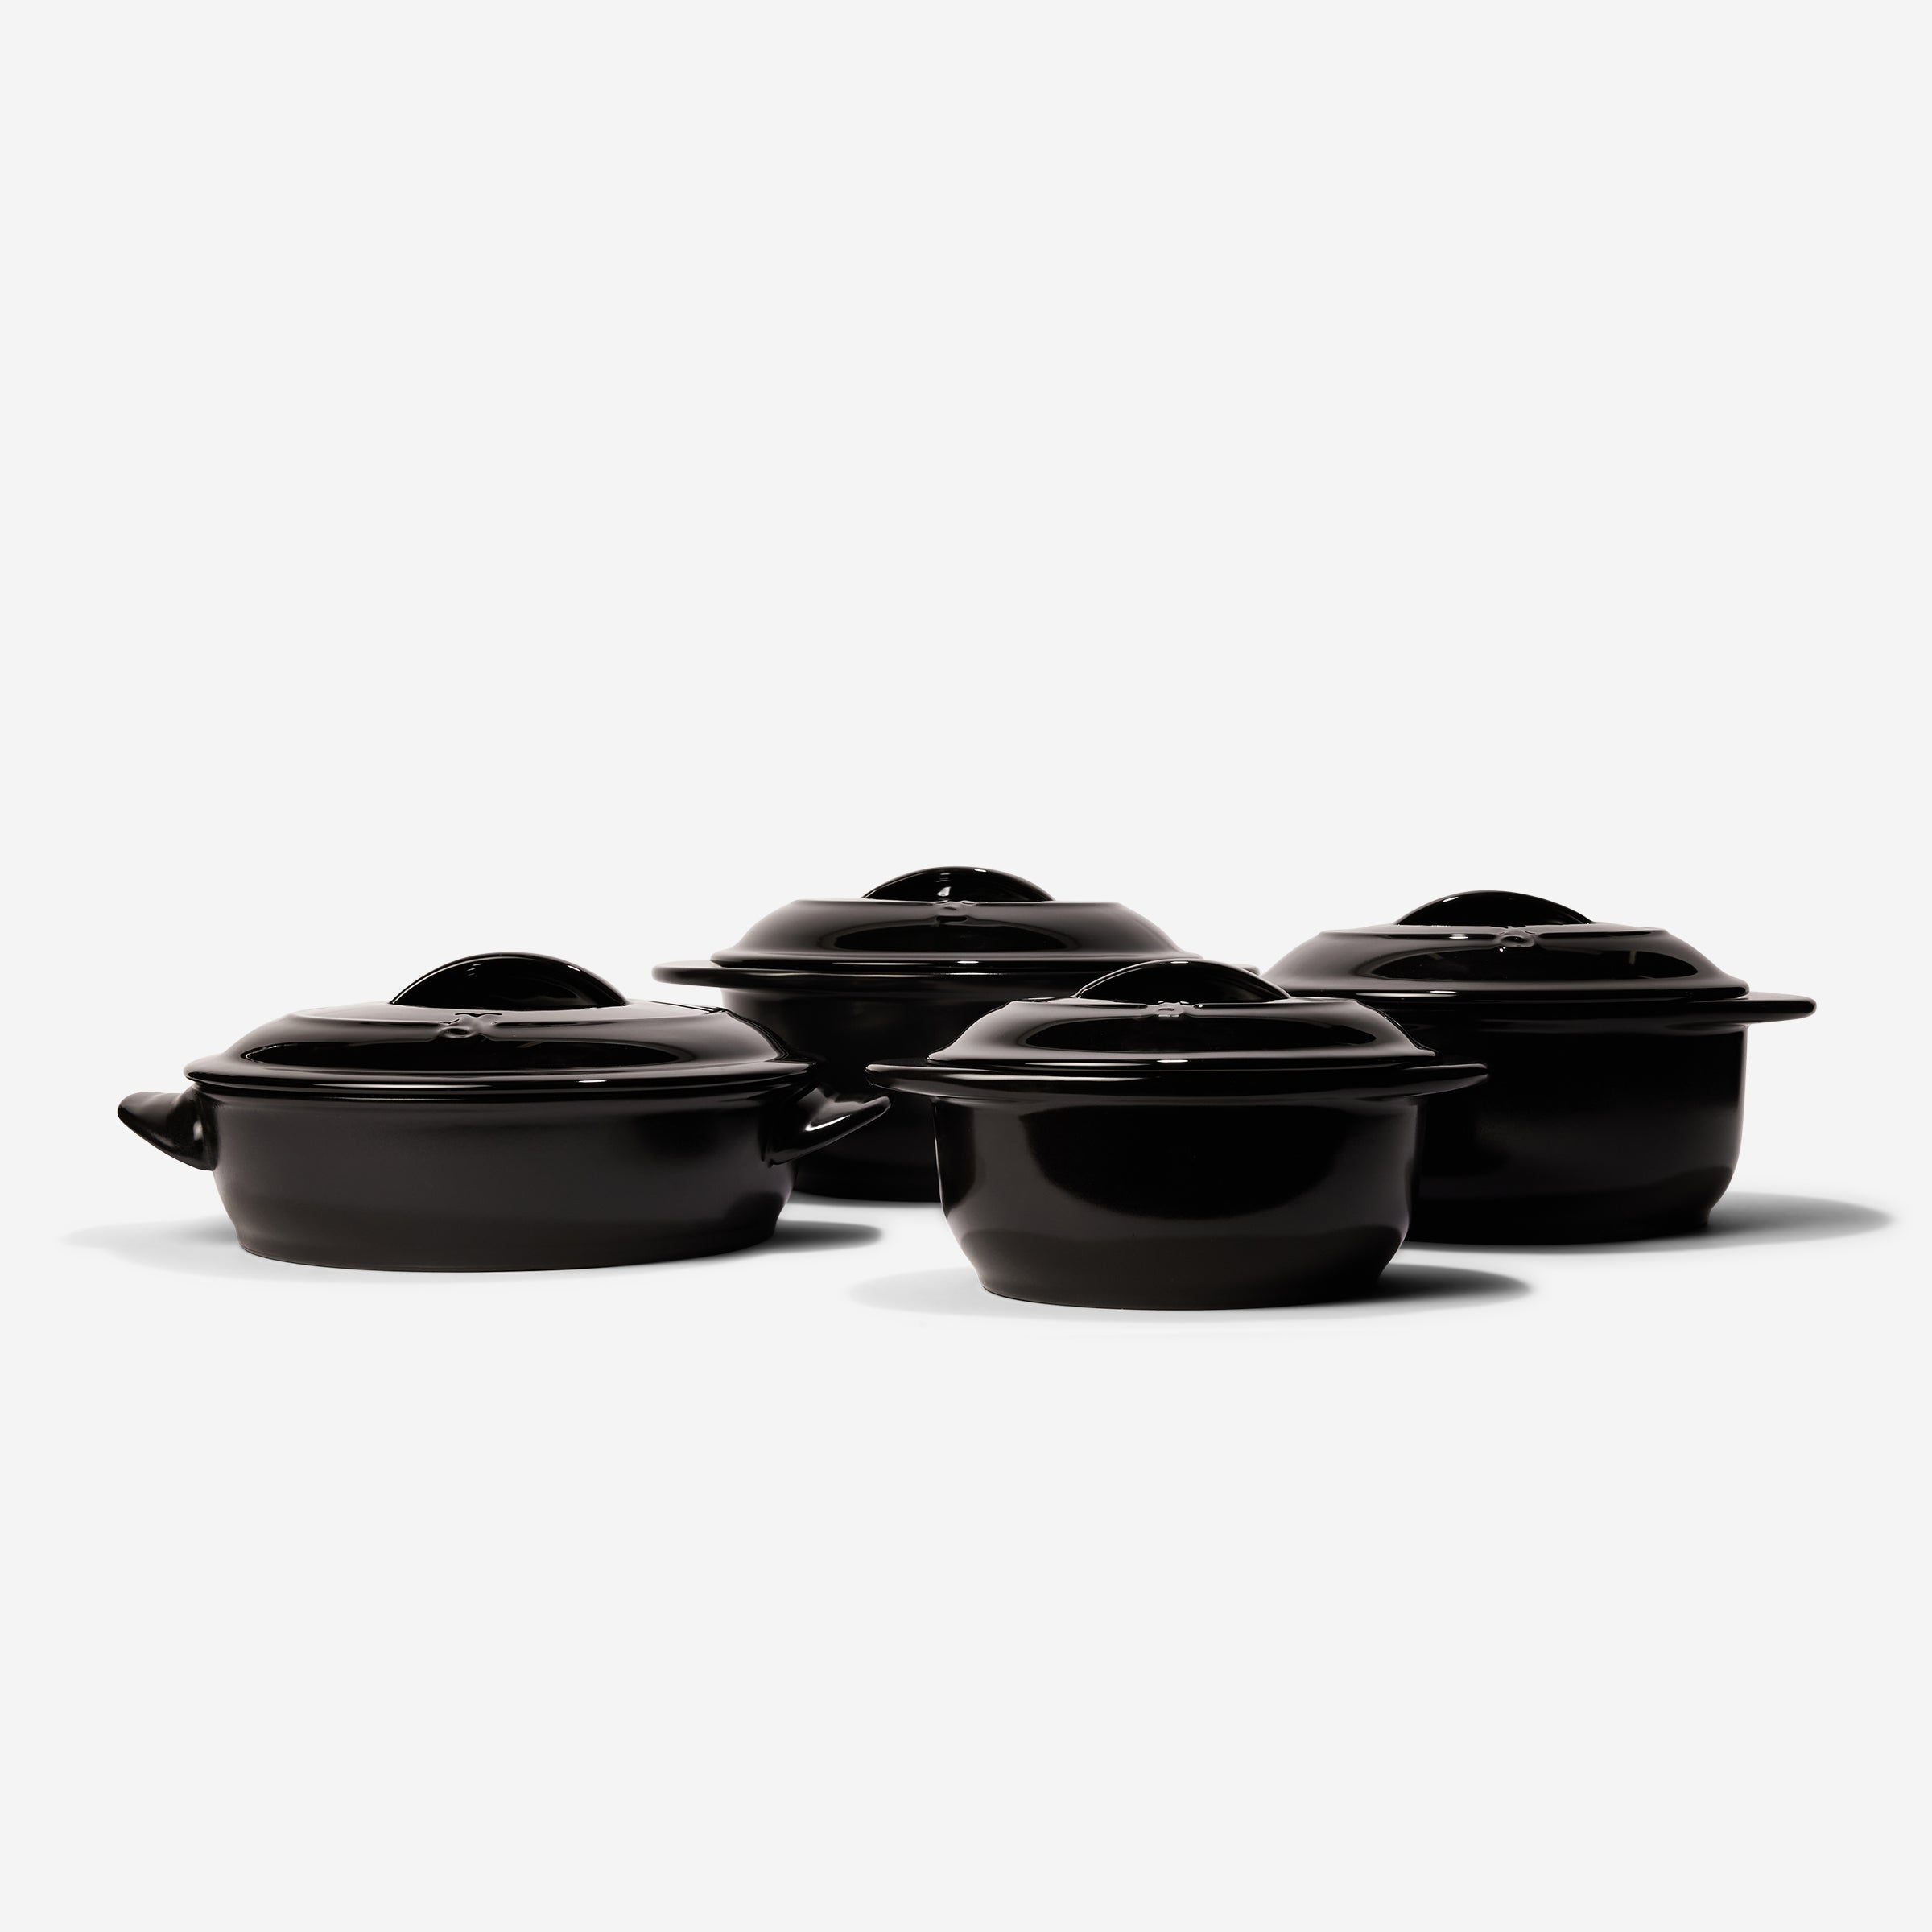 Ceramic 2.5-Quart Swirl Tea Kettle, Xtrema Teaware